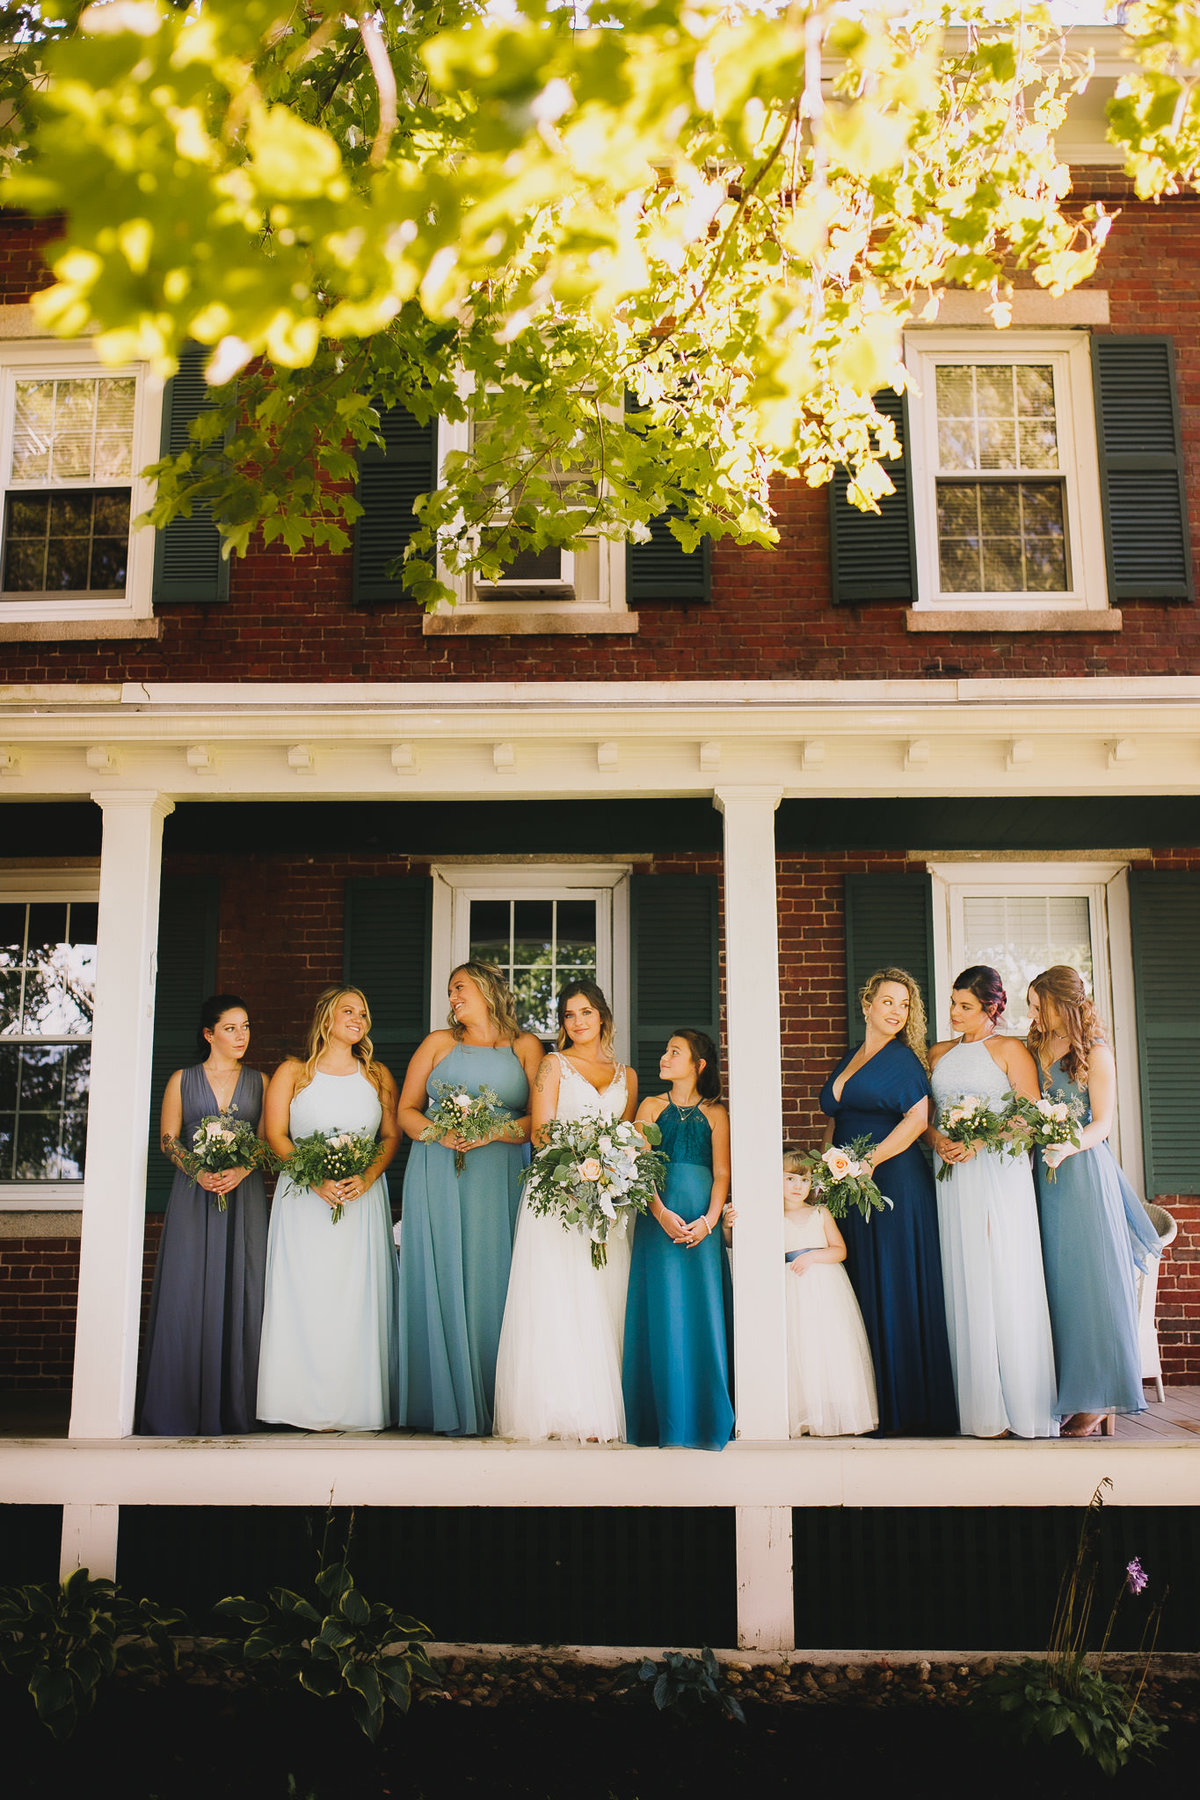 Archer Inspired Photography - Maine Wedding - SoCal International Traveling Photographer-376